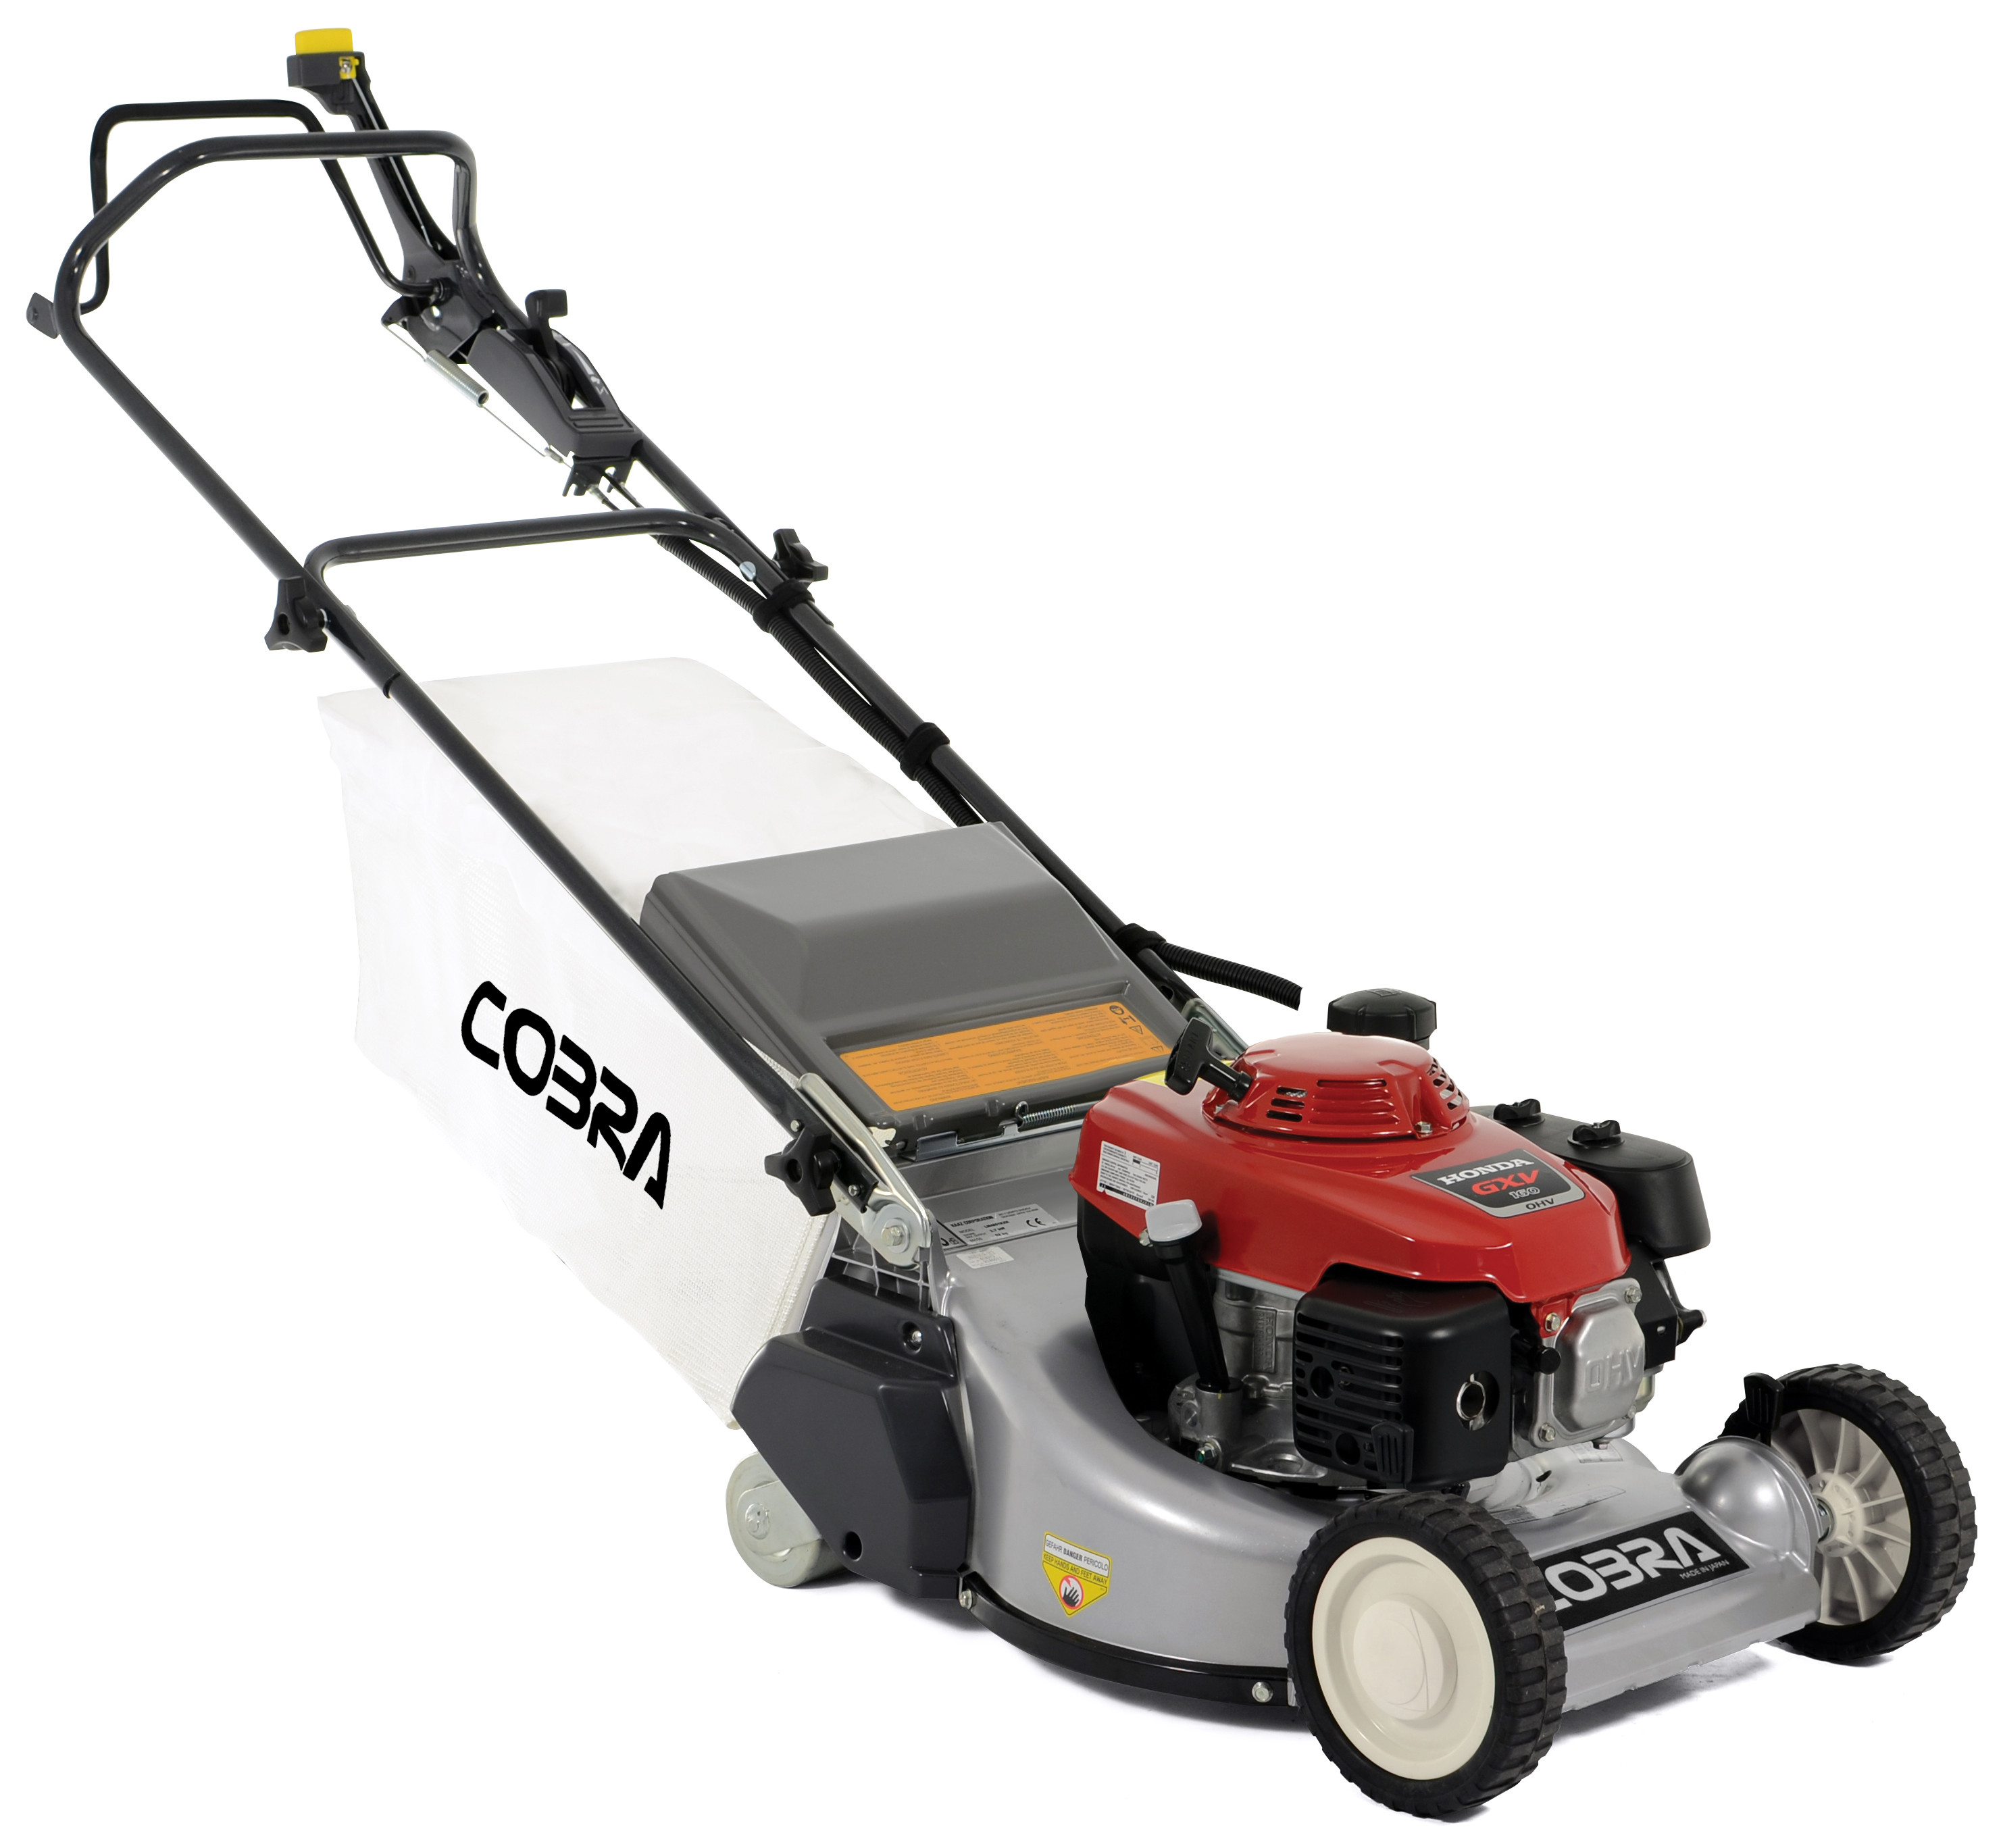 Cobra RM48SPH 19" Petrol Powered Rear Roller Lawnmower